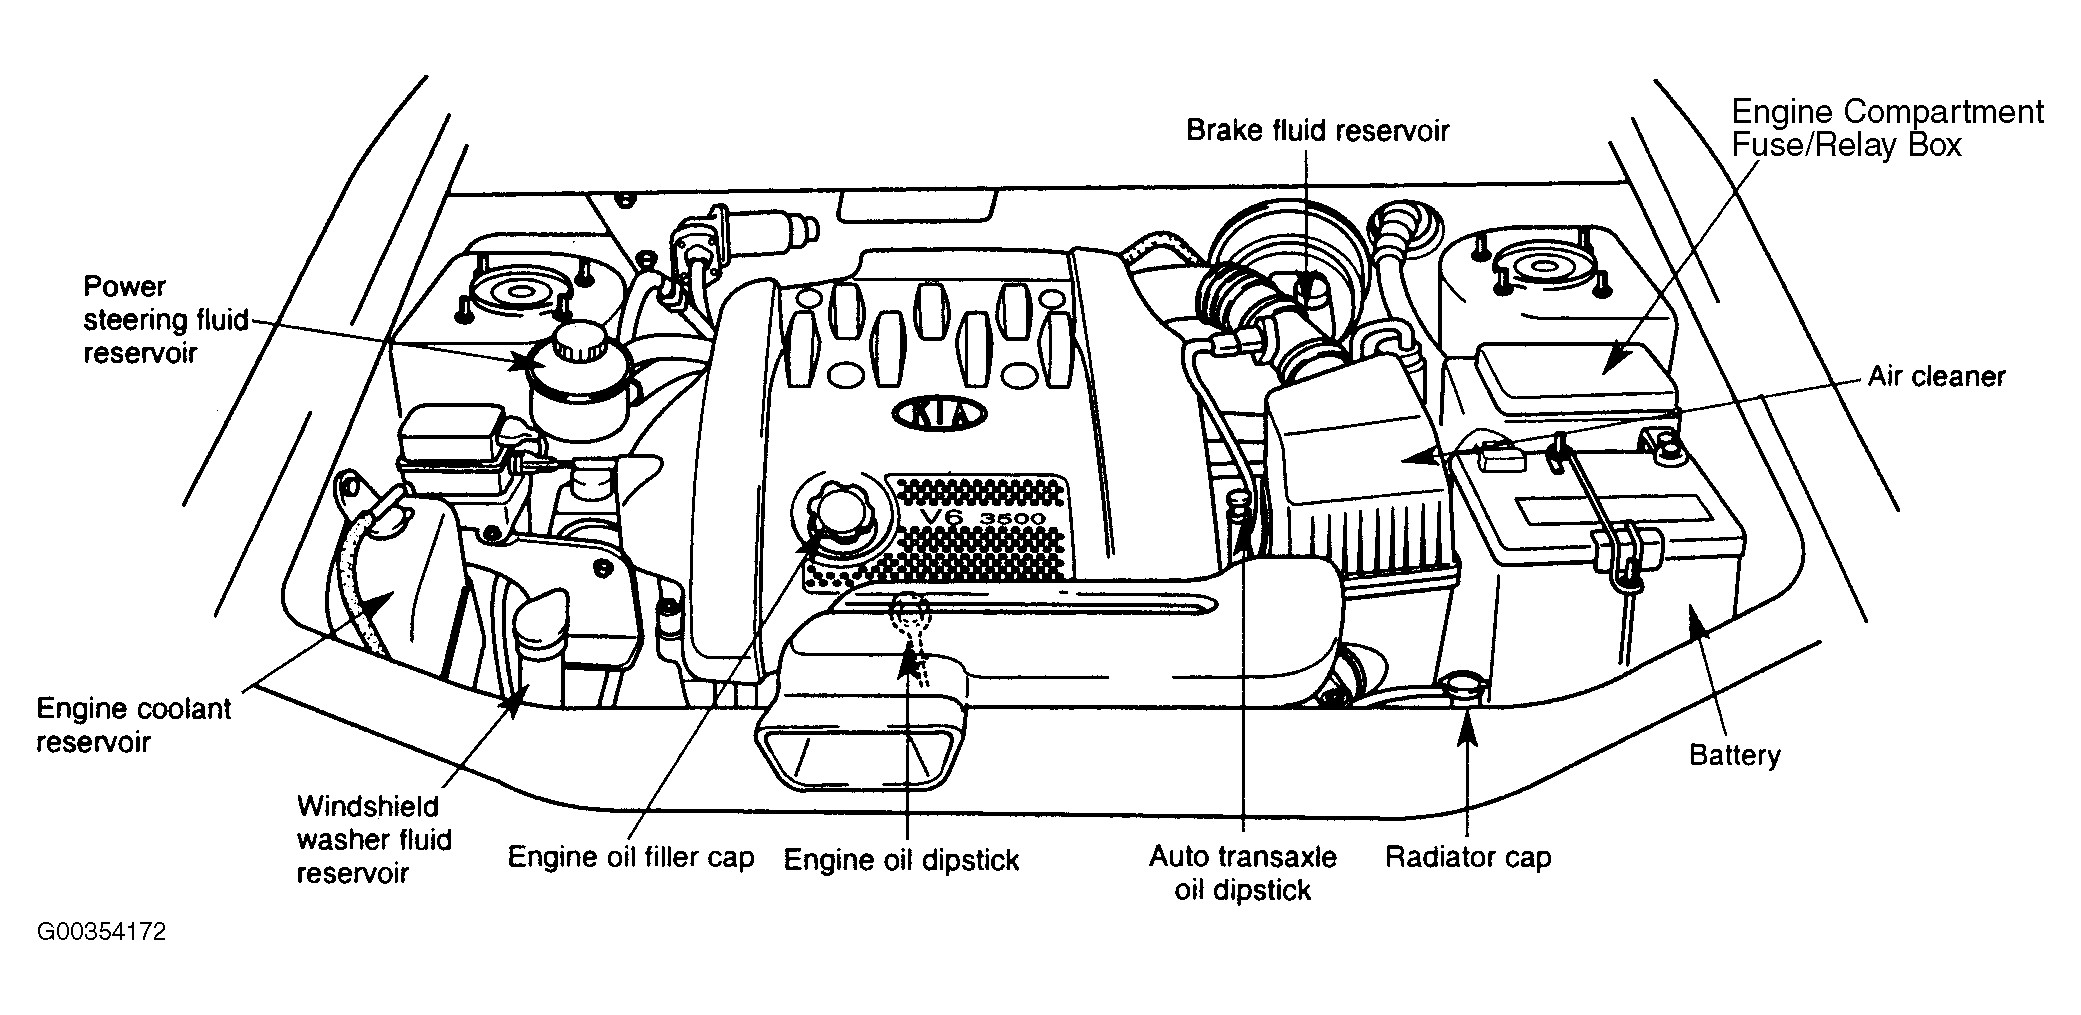 2002 Kia Sedona Engine Diagram Radio and Instrument Cluster Lights Stopped Working On My 2002 Kia